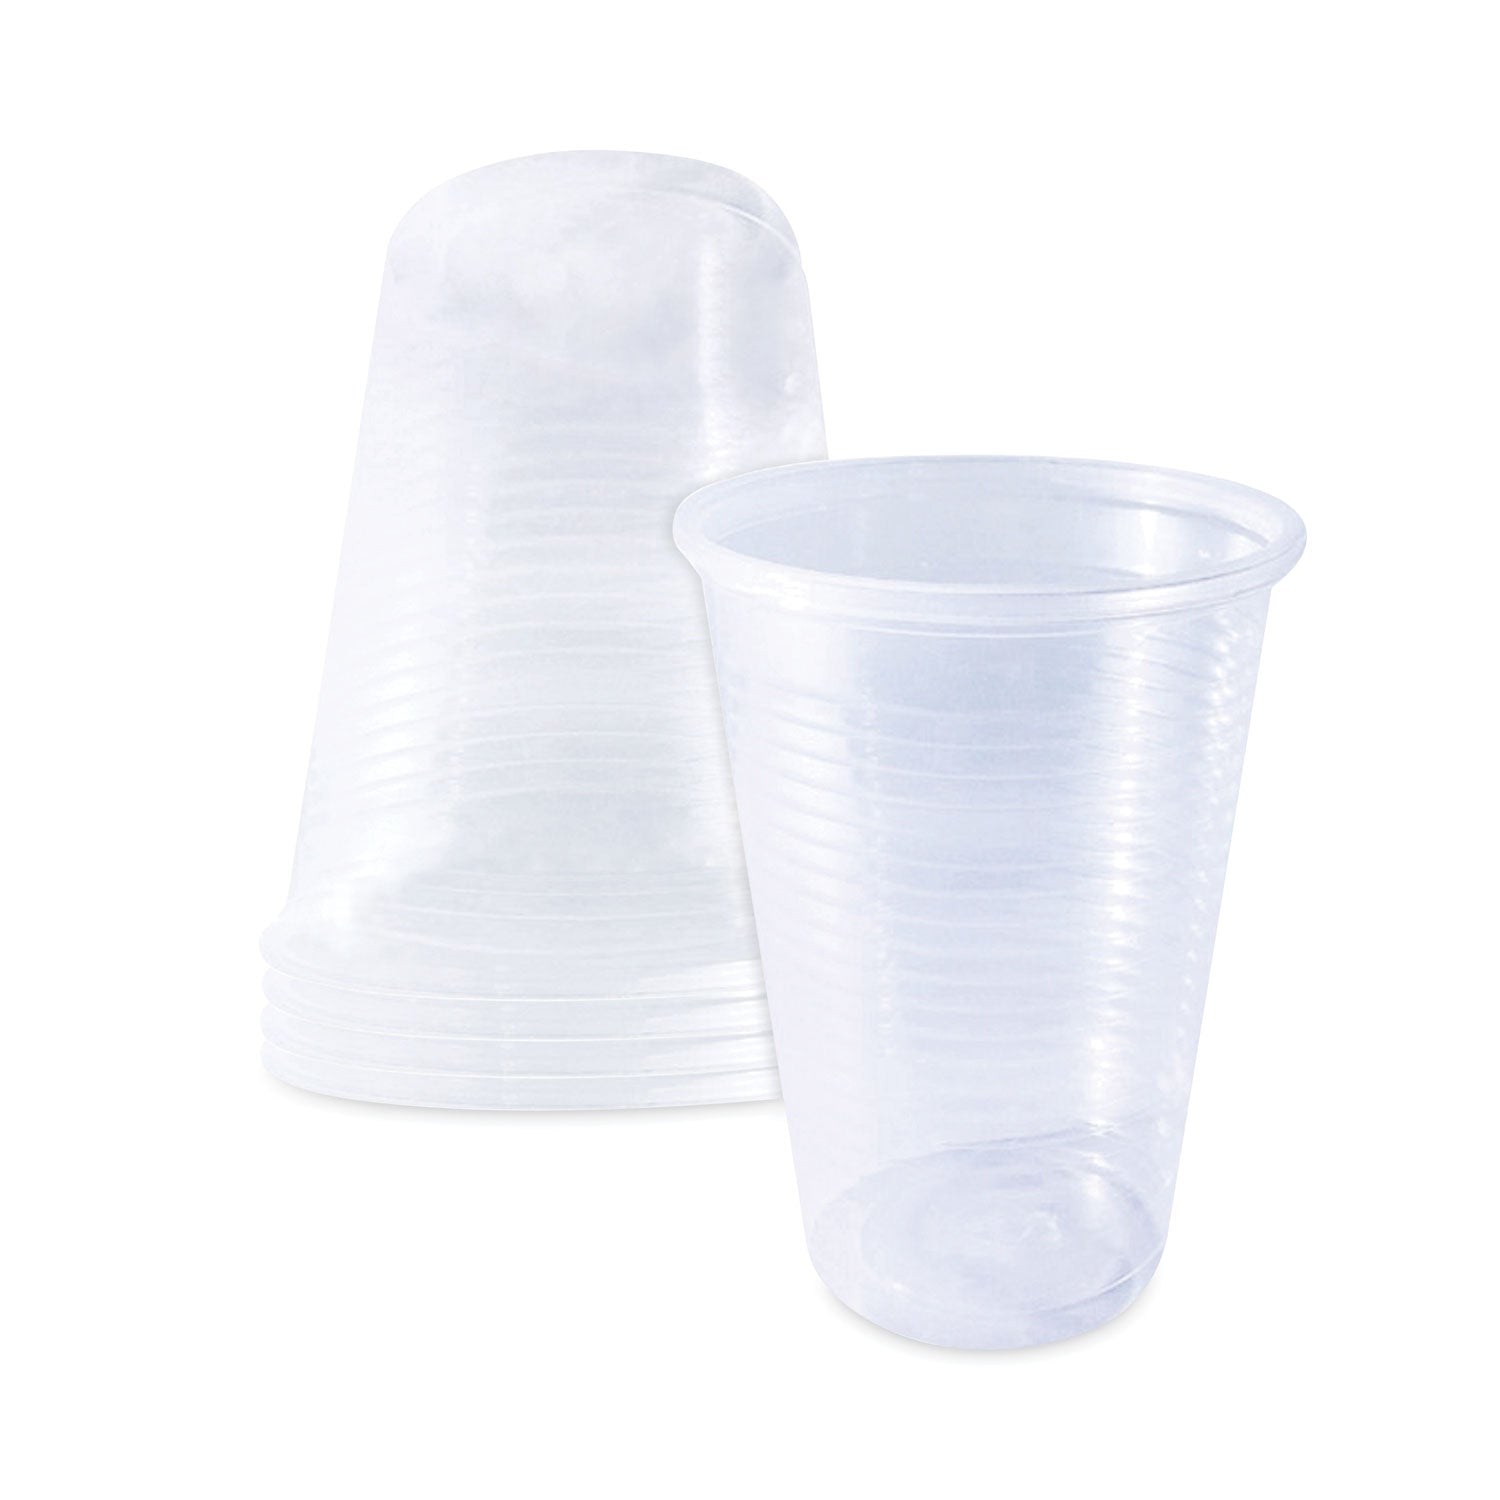 pet-cold-cups-12-oz-clear-1000-carton_syd00212c - 3